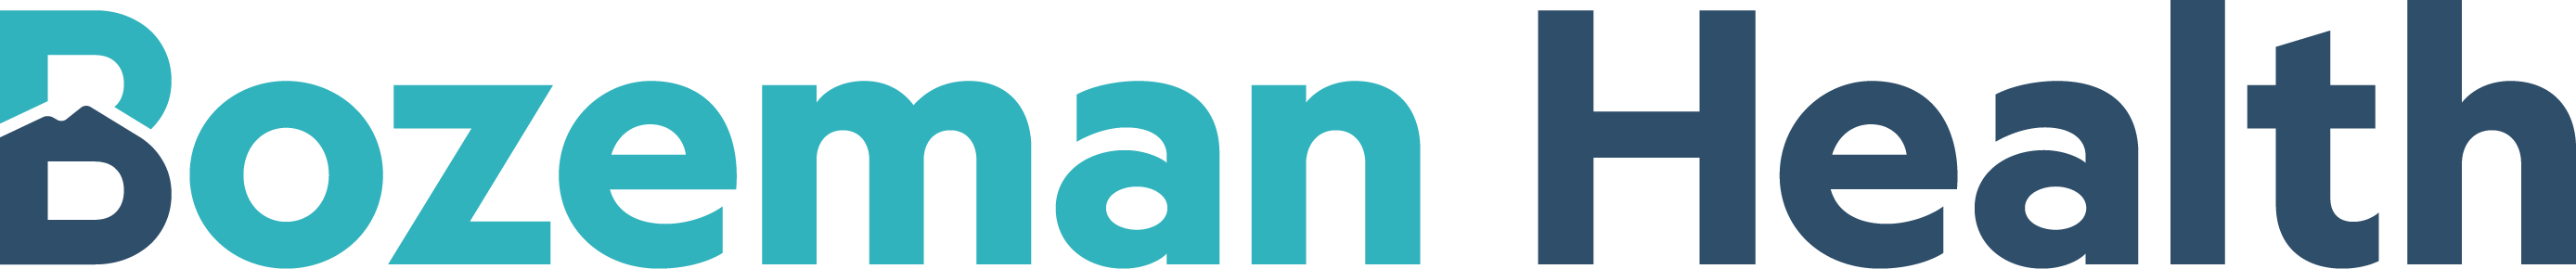 Bozeman Health Corporate logo